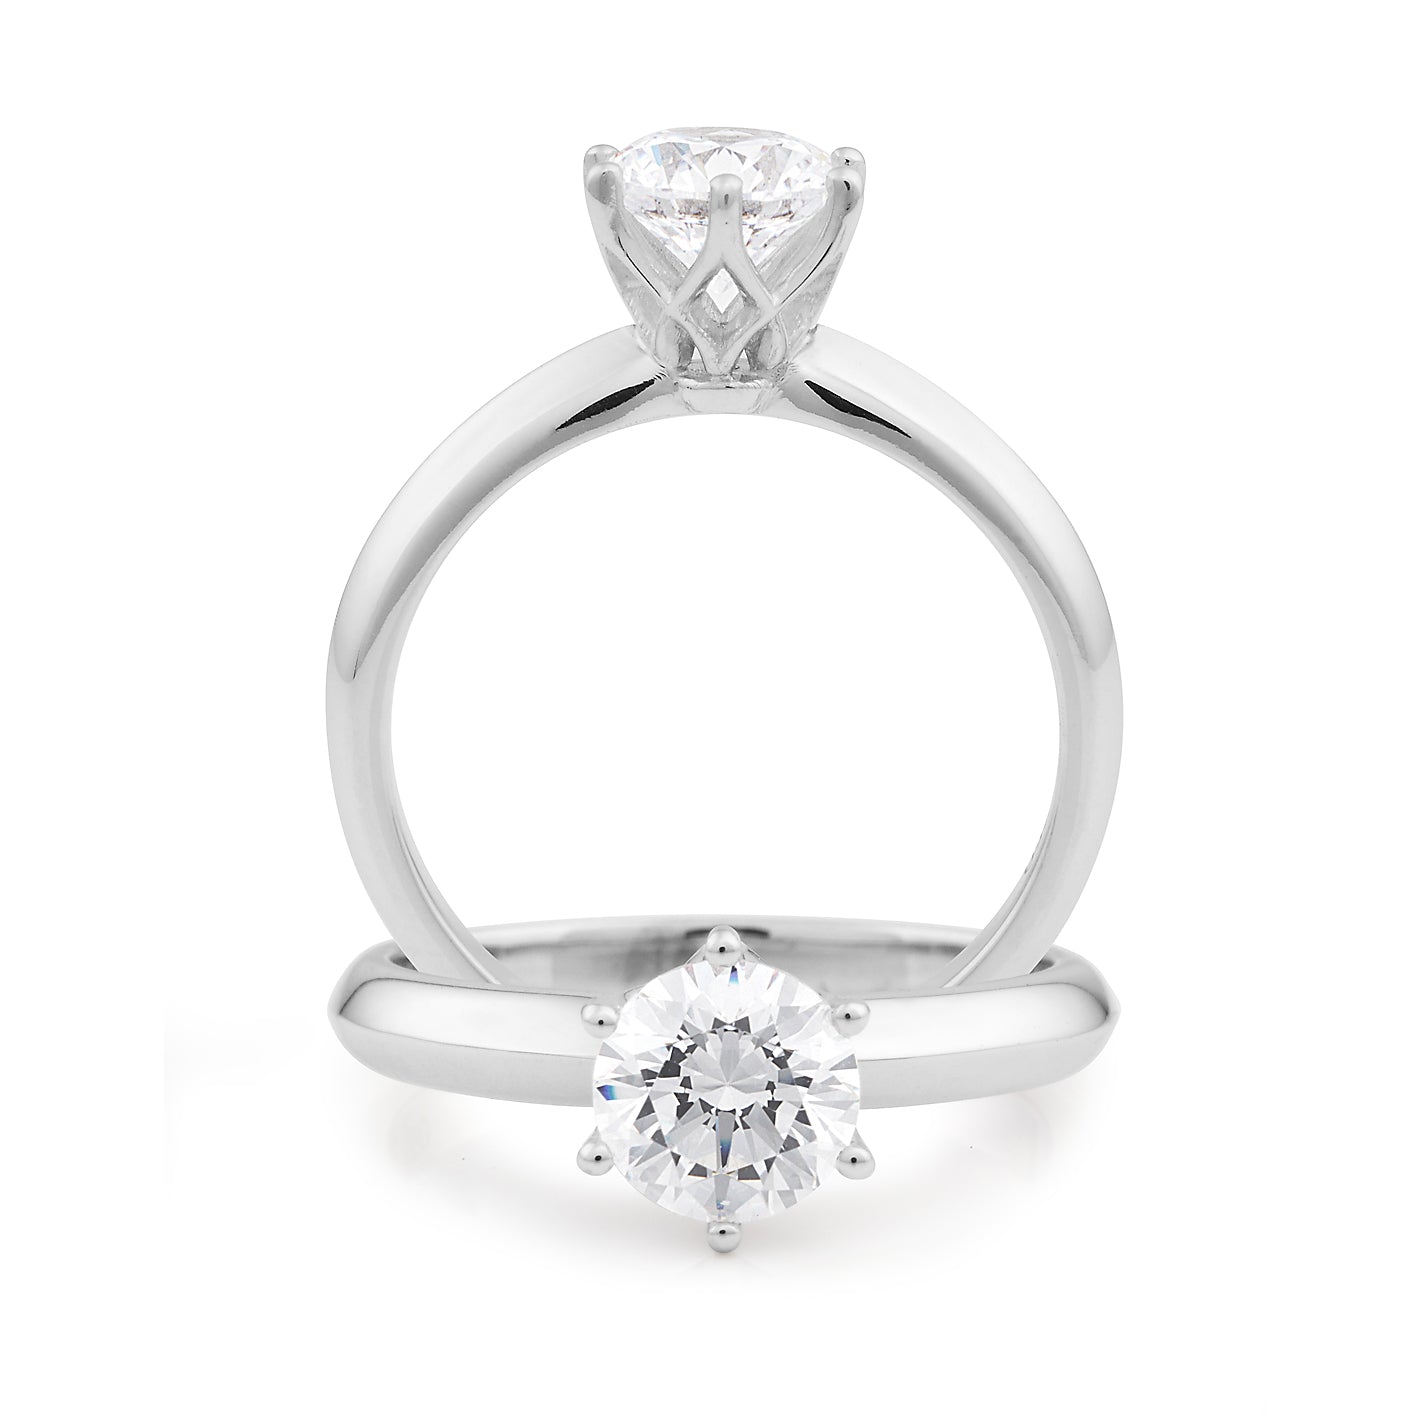 18ct White Gold Round Brillant cut Solitaire Diamond engagement ring, 0.50 carat centre